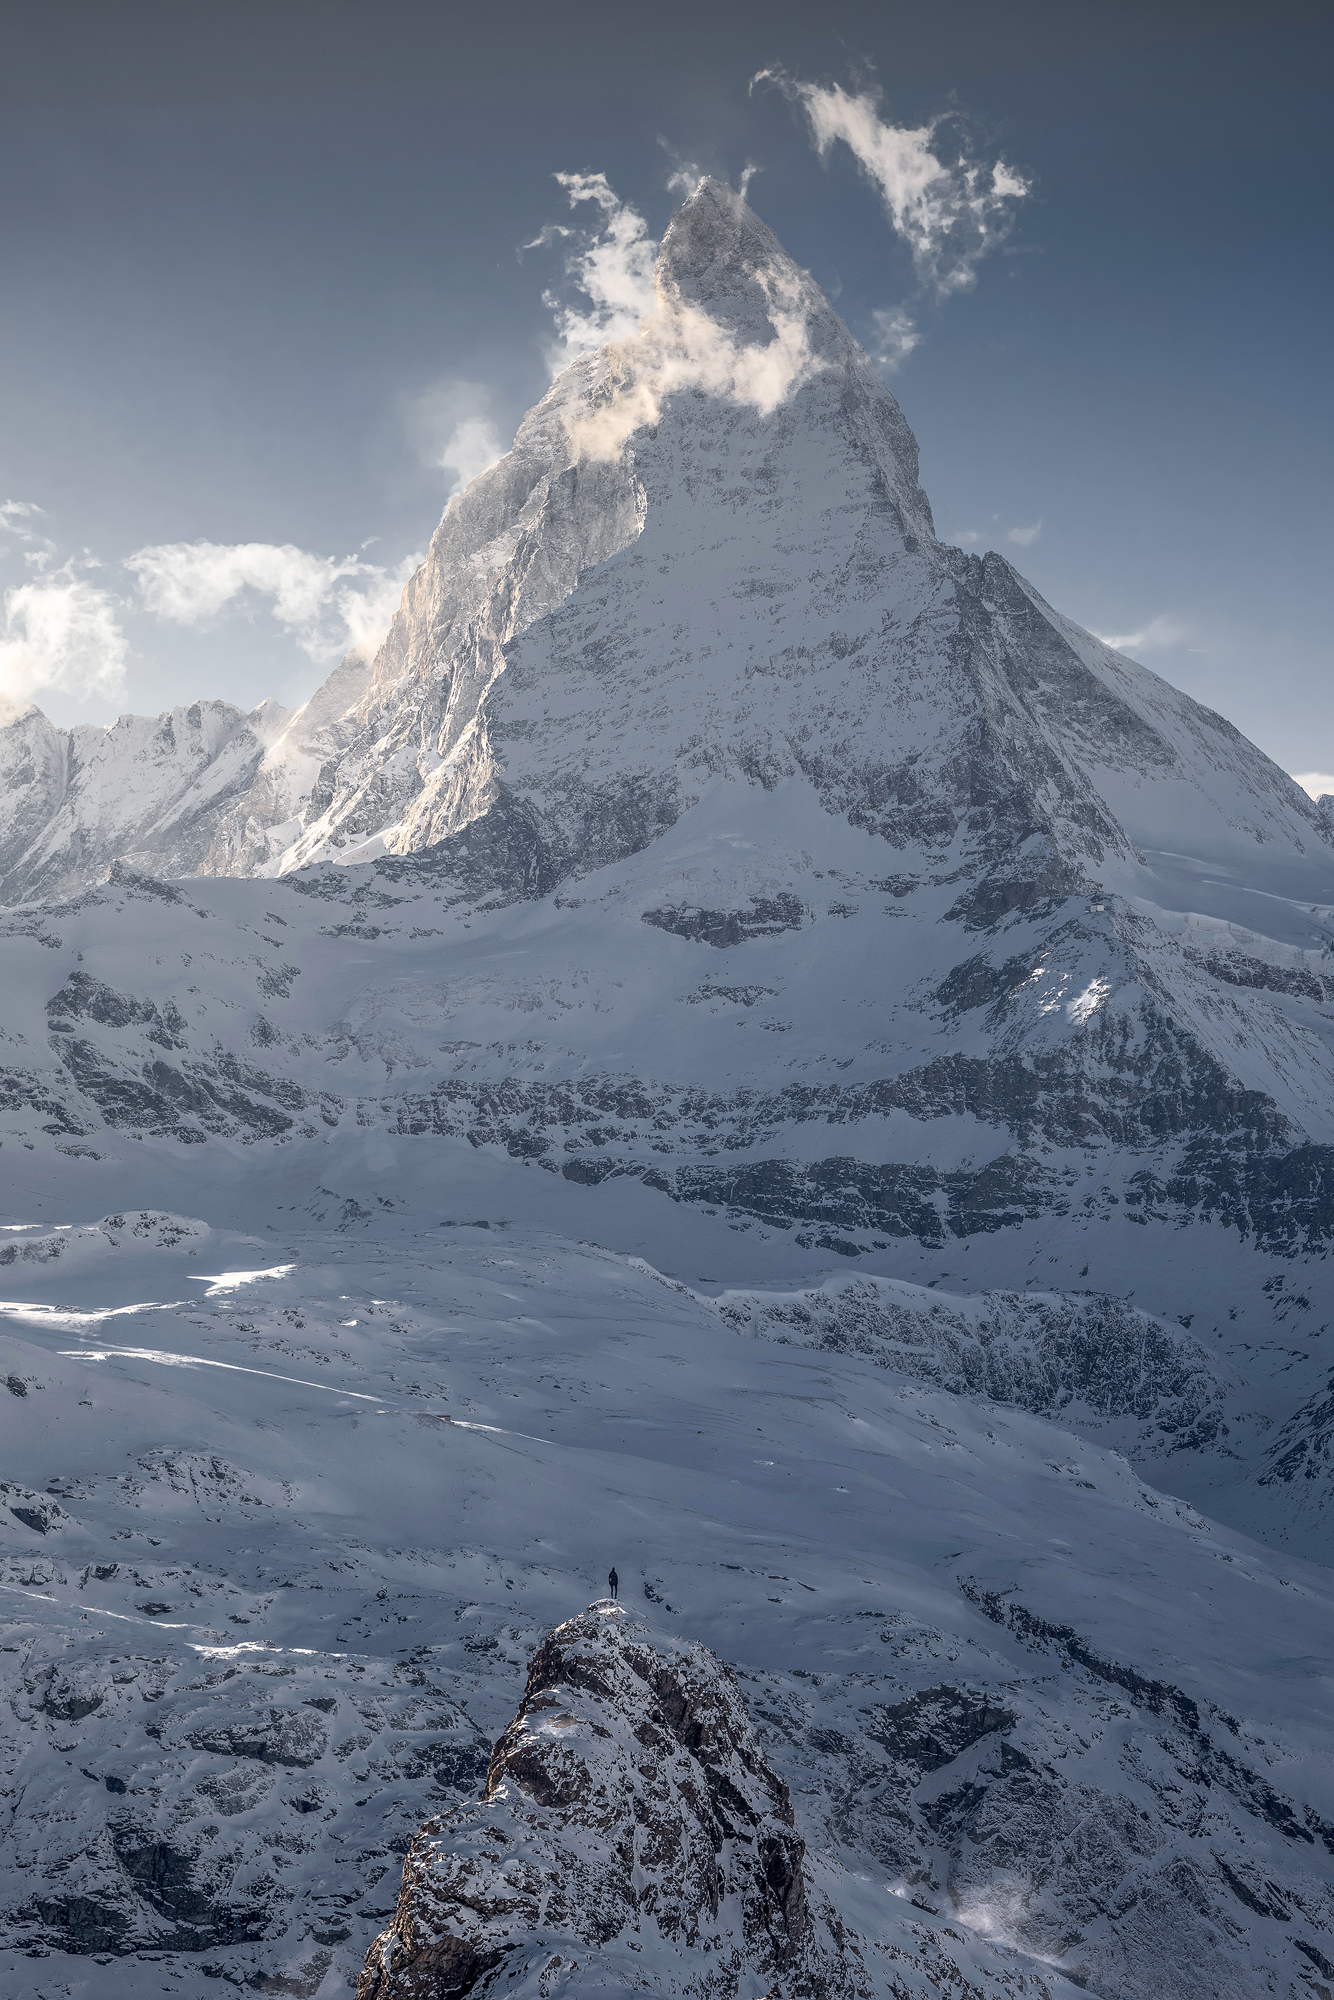 His majesty, the Matterhorn...